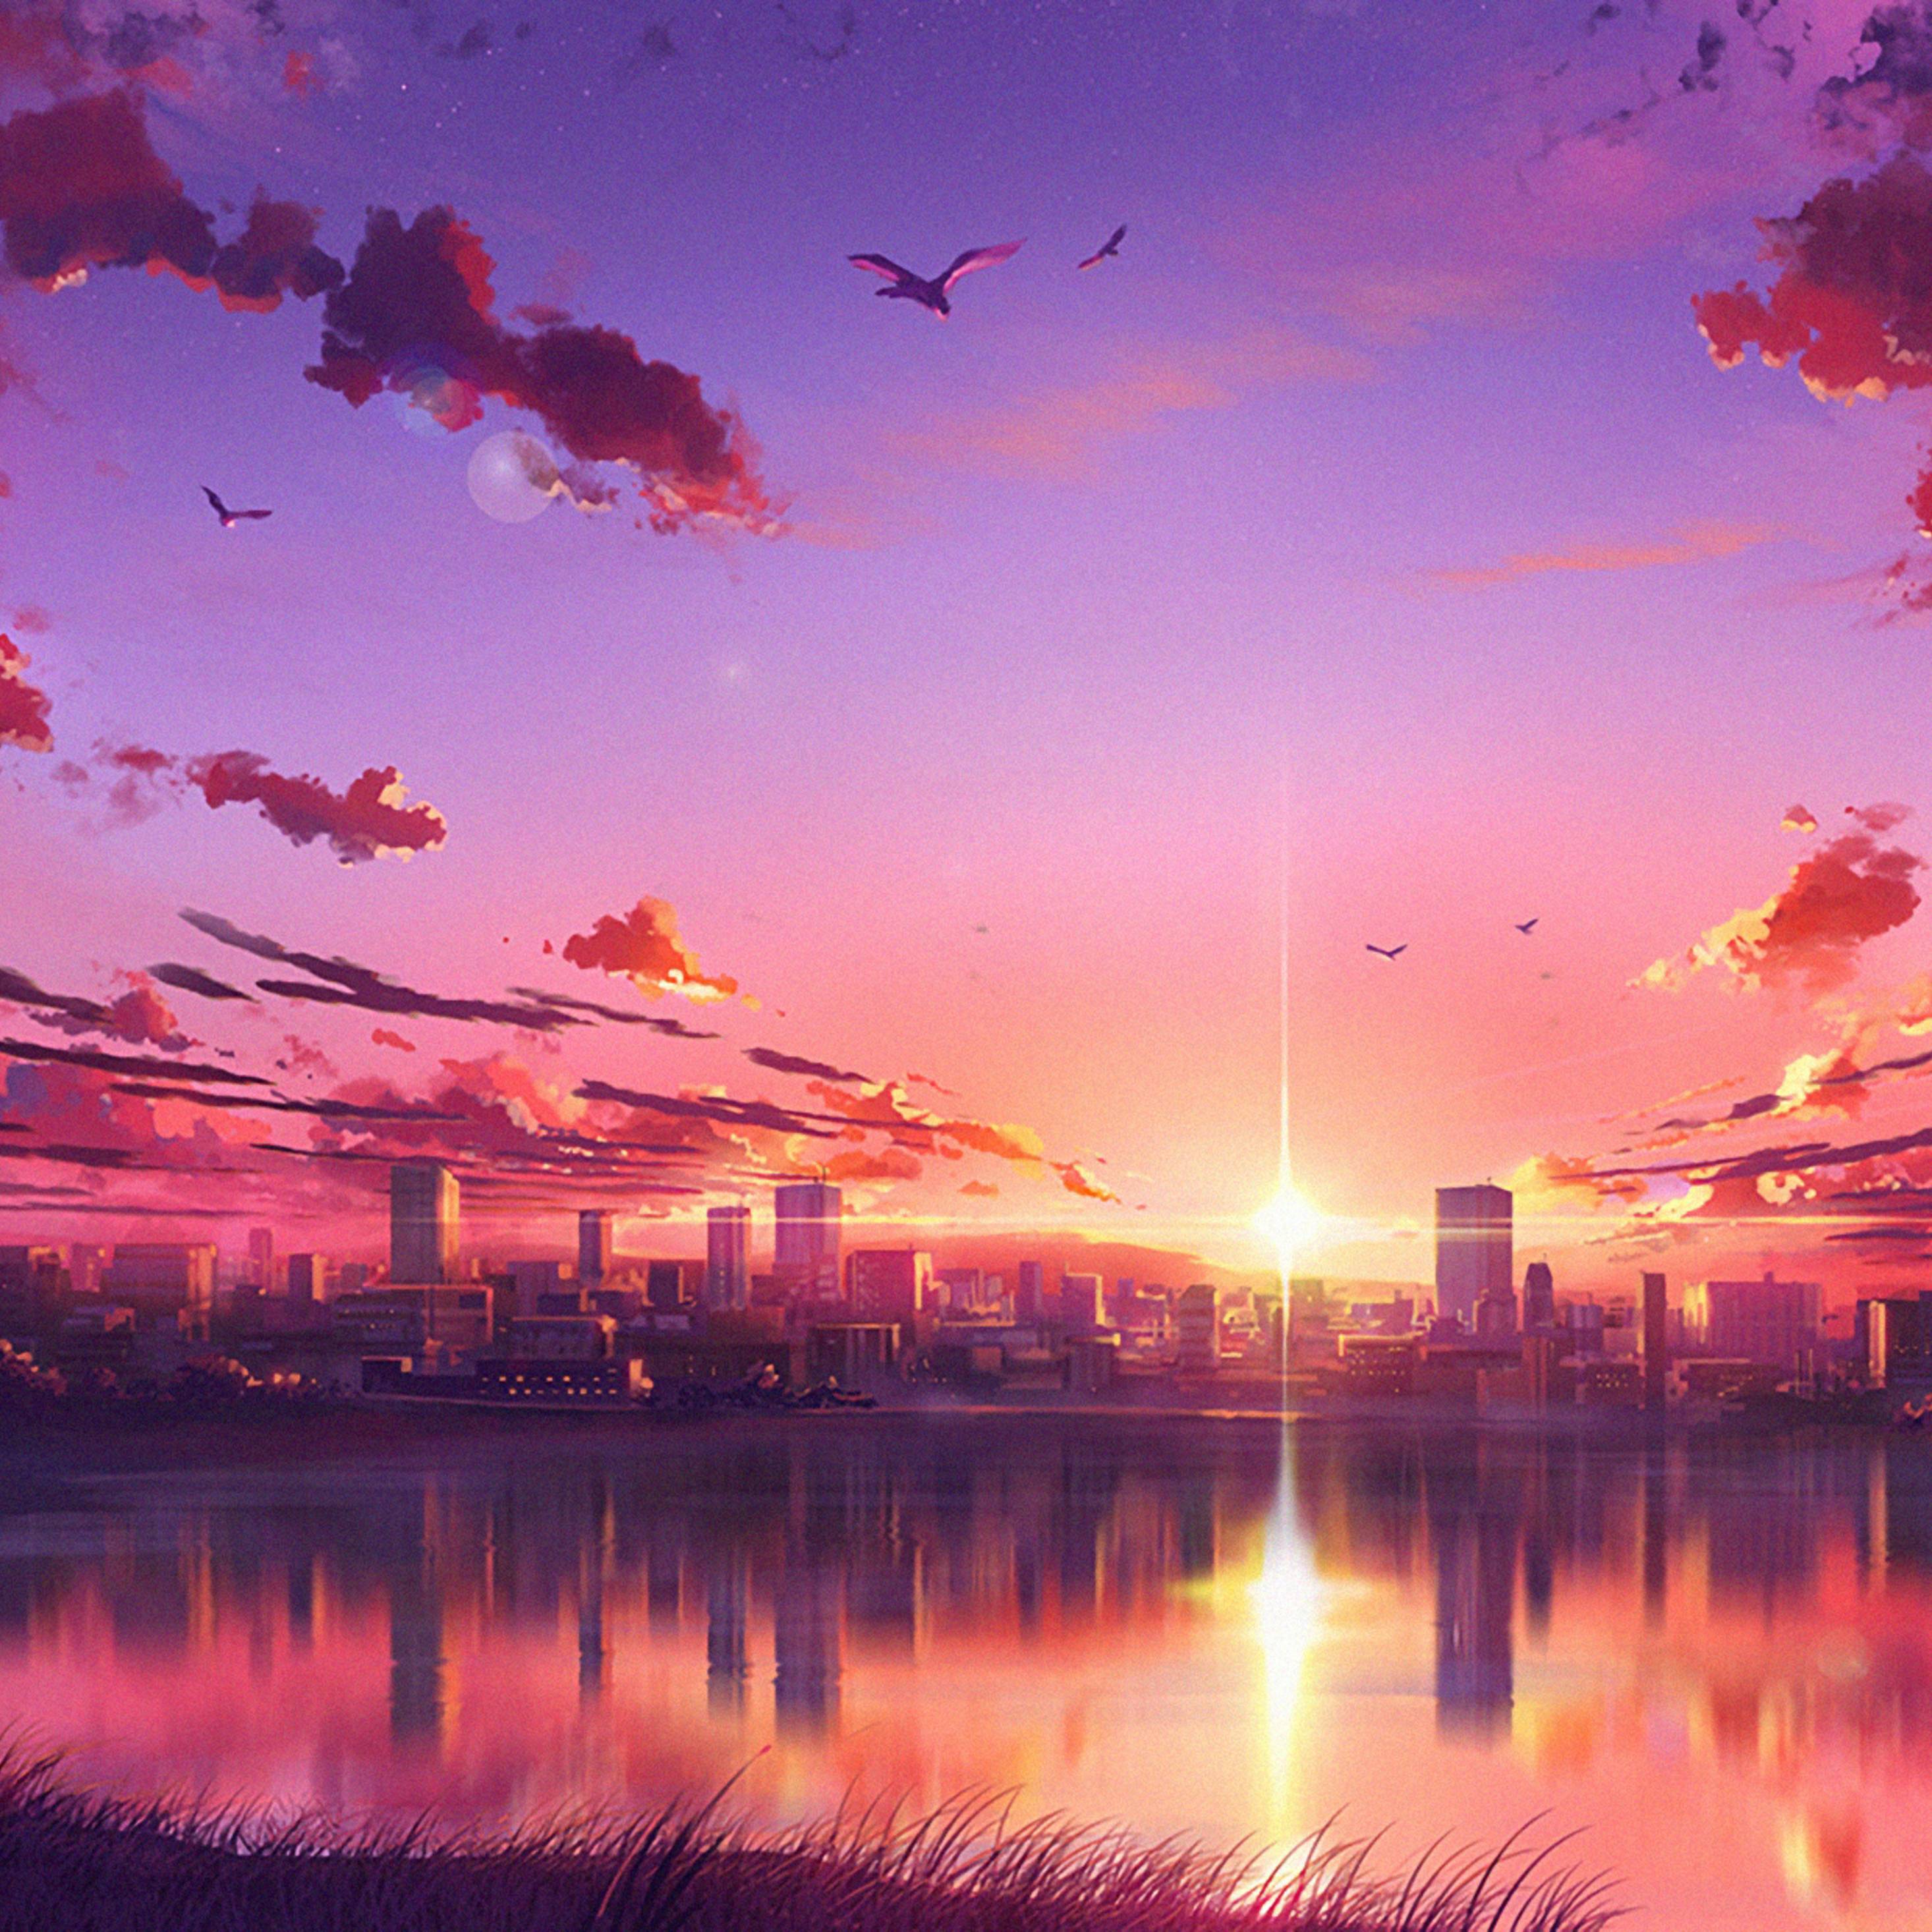 Anime Sunset Scene iPad Pro Retina Display HD 4k Wallpaper, Image, Background, Photo and Picture